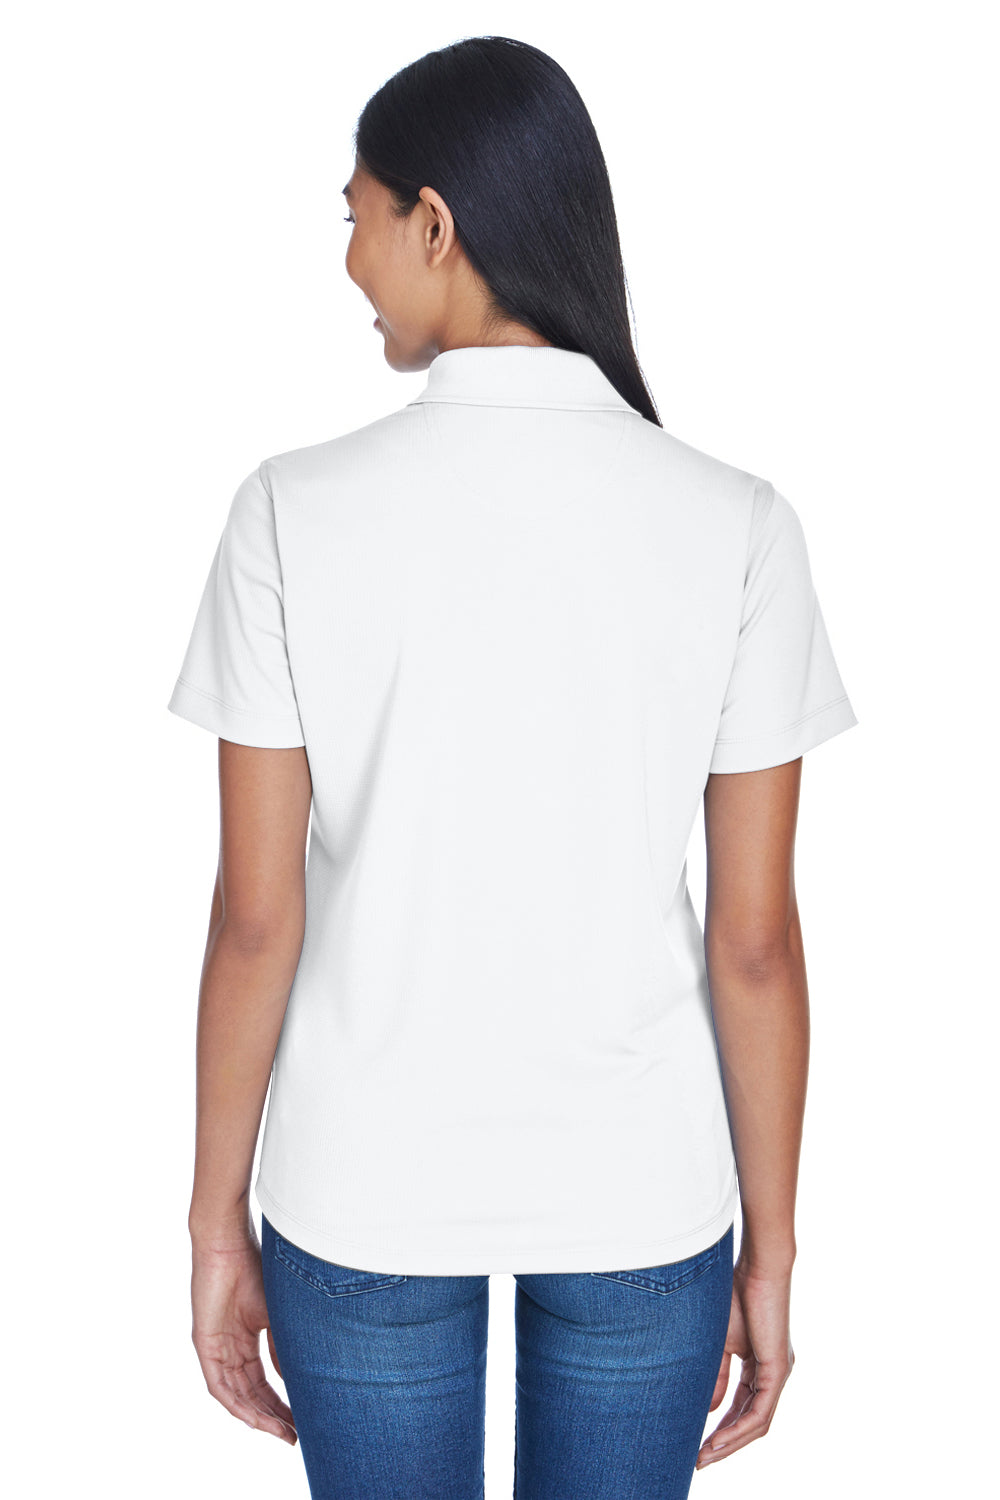 UltraClub 8445L Womens Cool & Dry Performance Moisture Wicking Short Sleeve Polo Shirt White Back